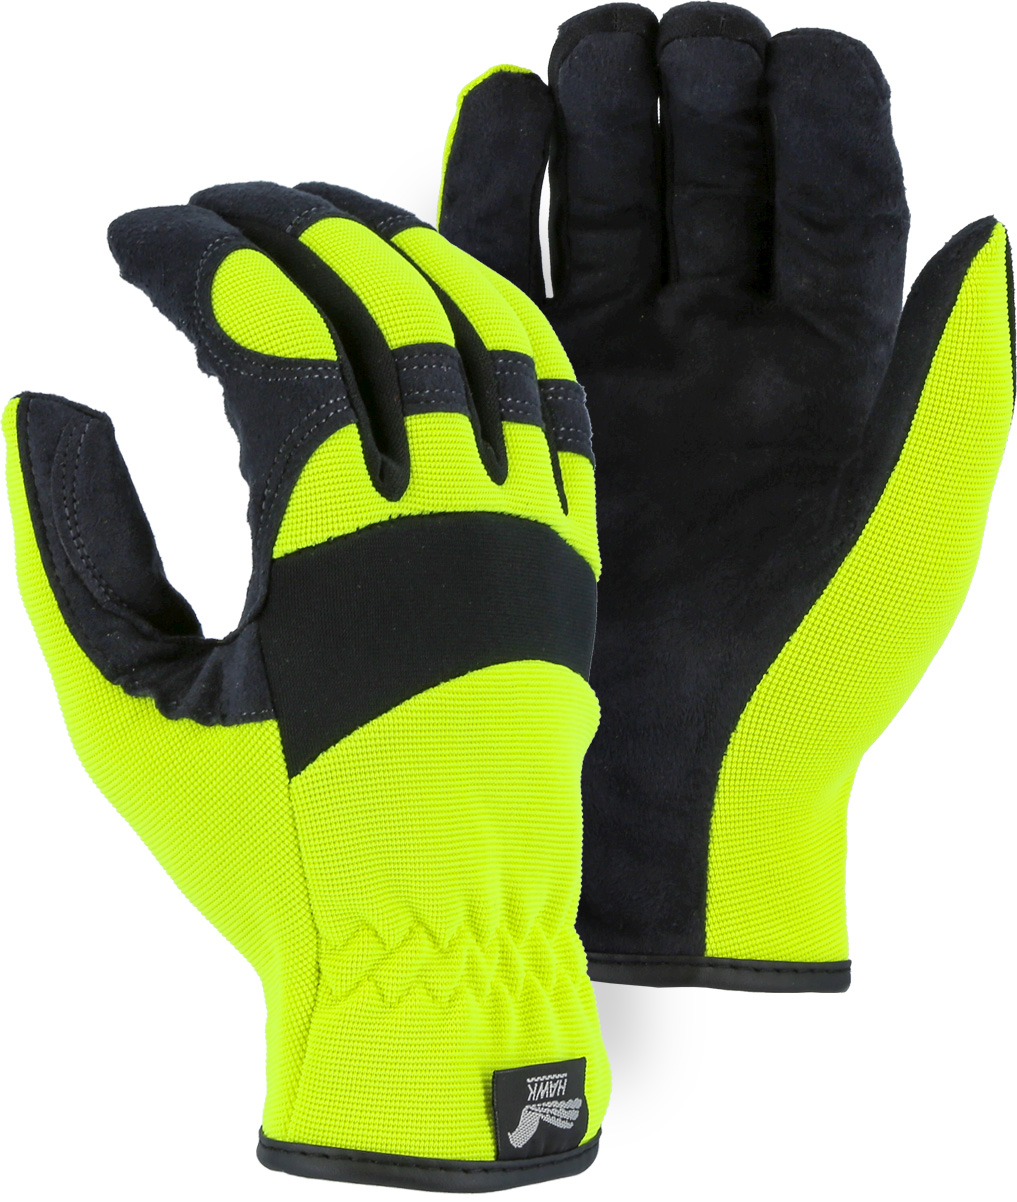 Picture of Majestic 2136HY Armor Skin™ Mechanics Glove with Hi-Viz Knit Back